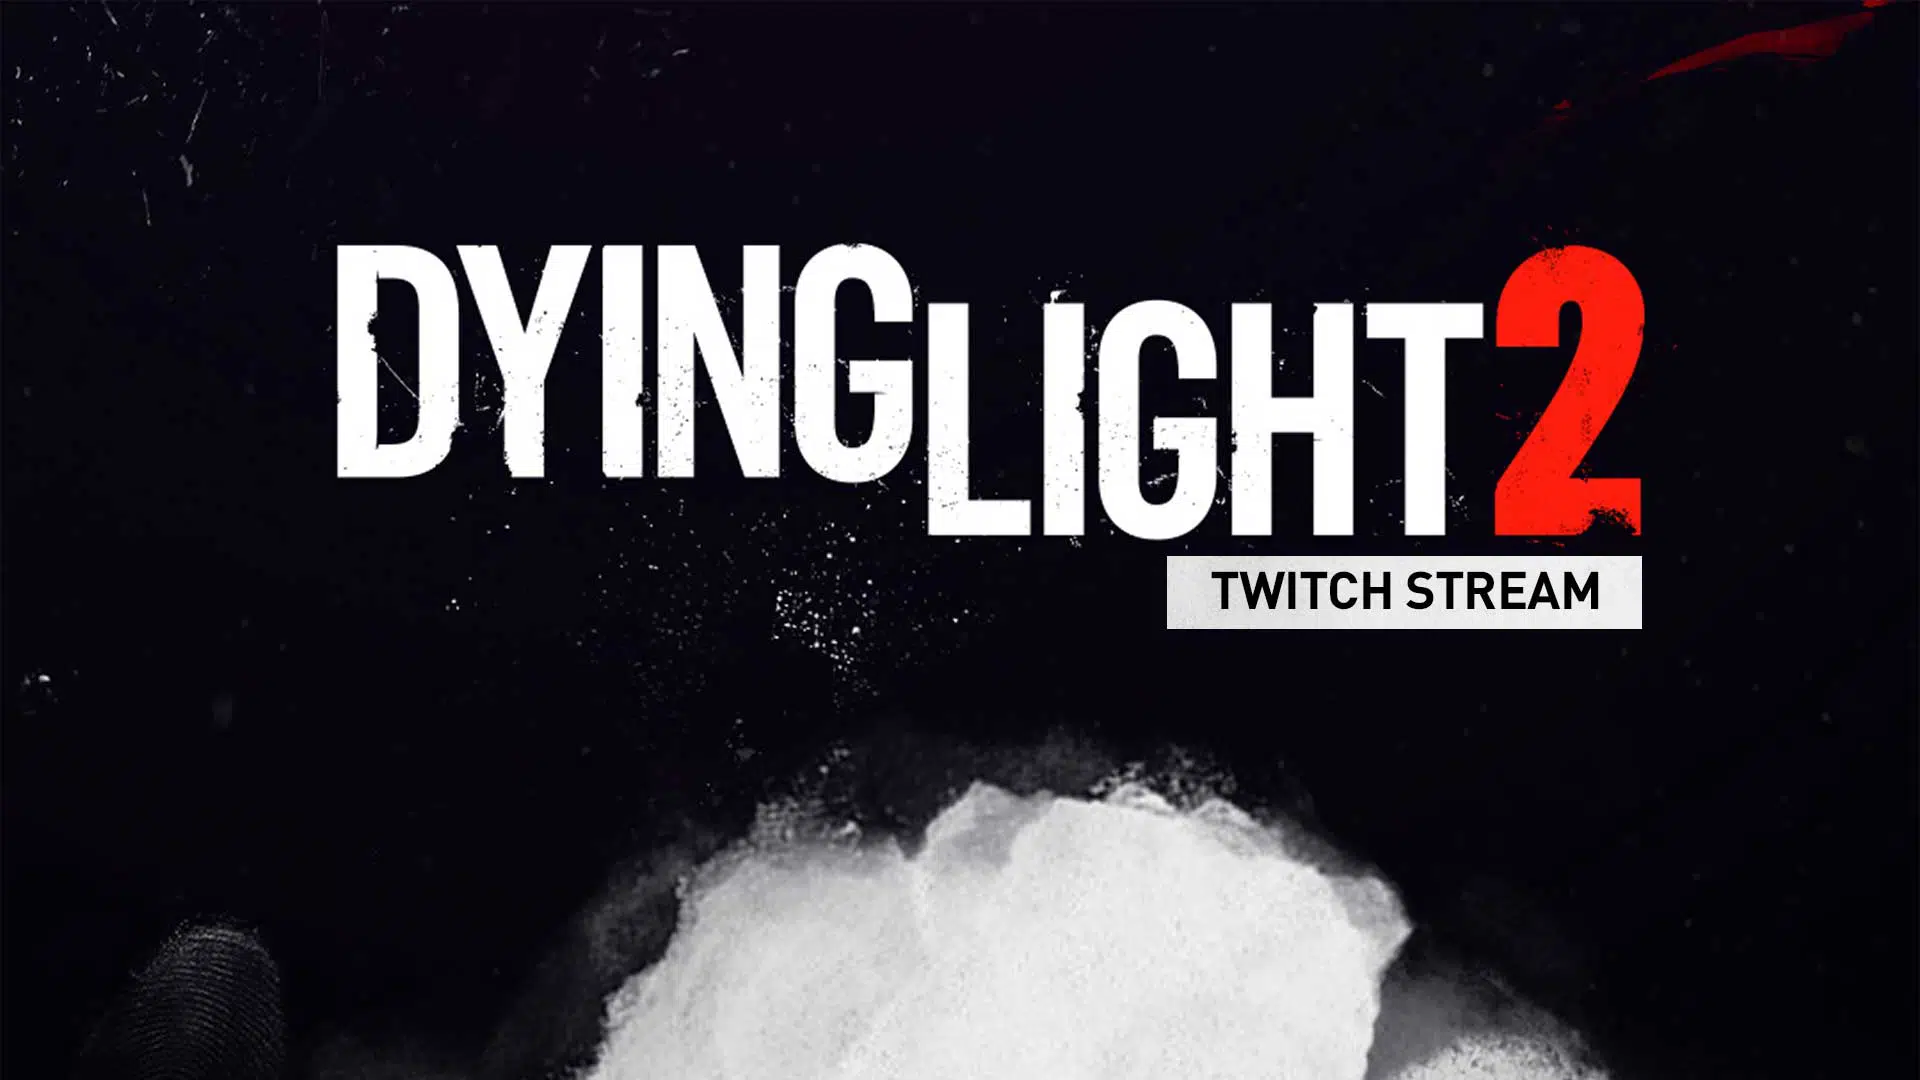 dying light 2 stream